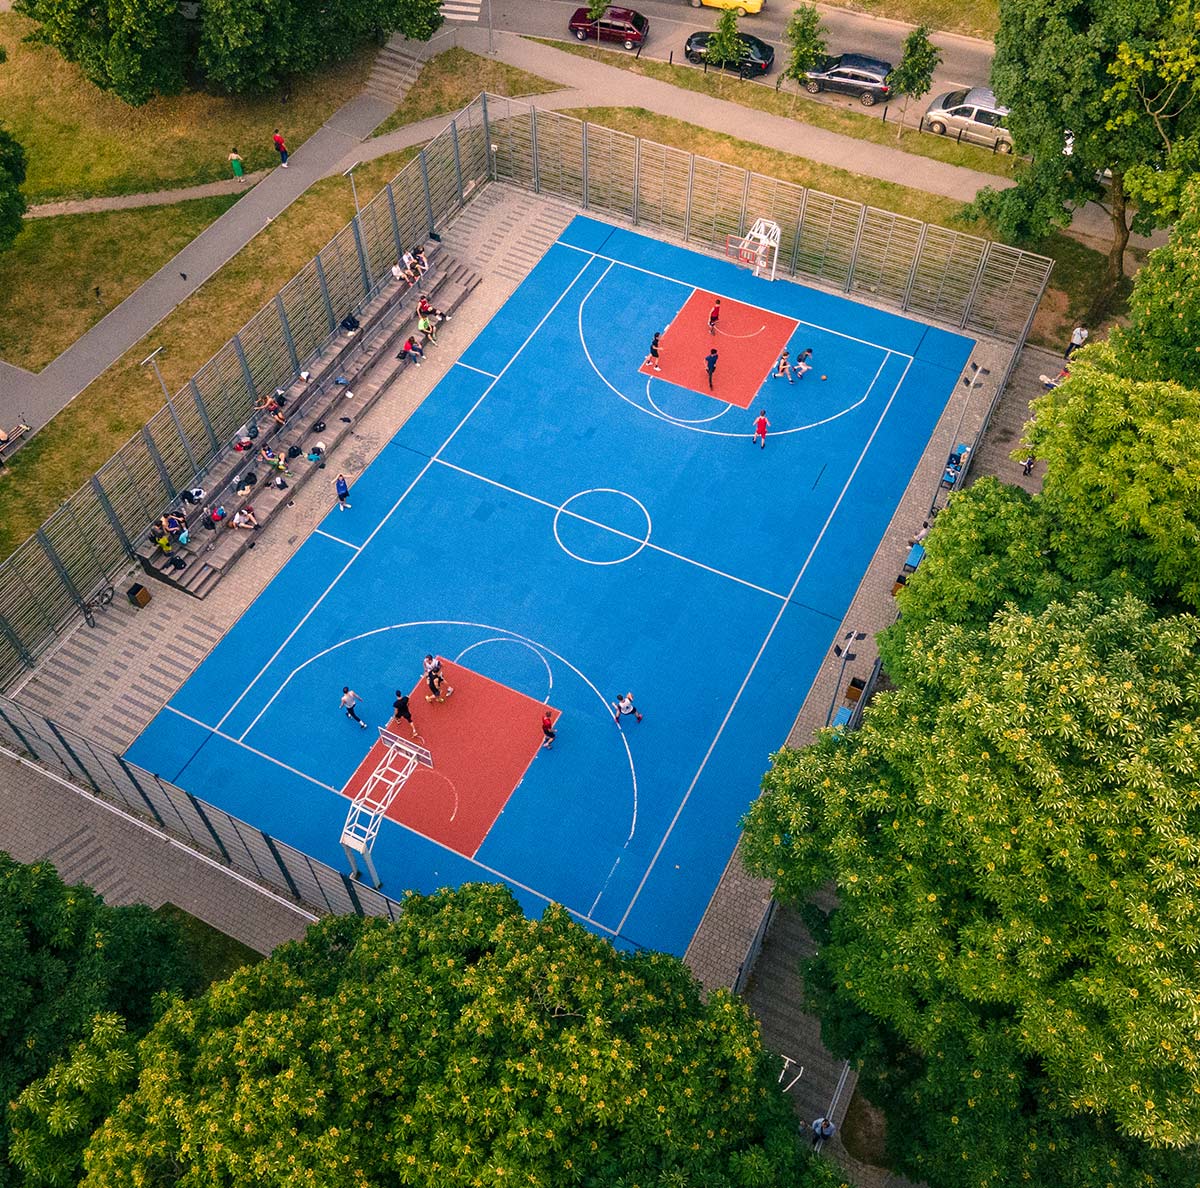 Outdoor Sport Courts in Northern Virginia